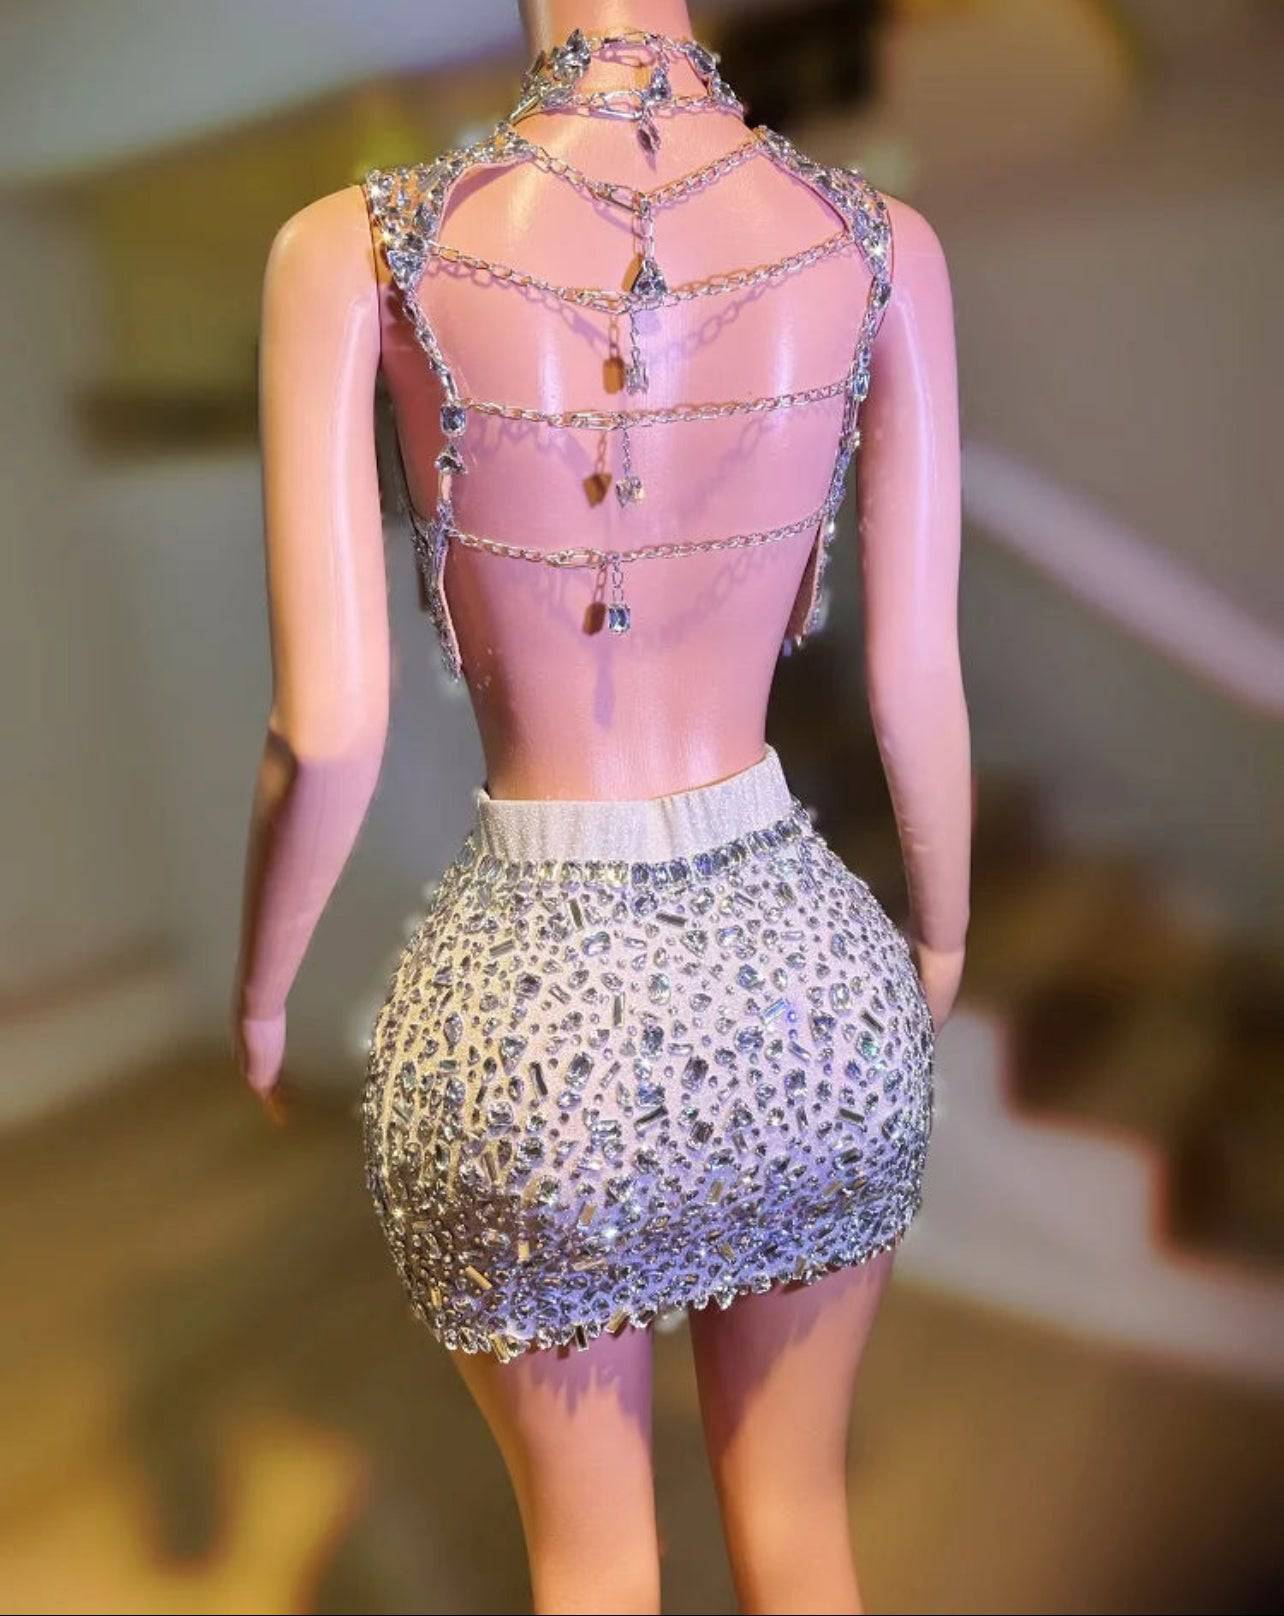 Diamond Backless Top And Skirt Set - Veronica Luxe